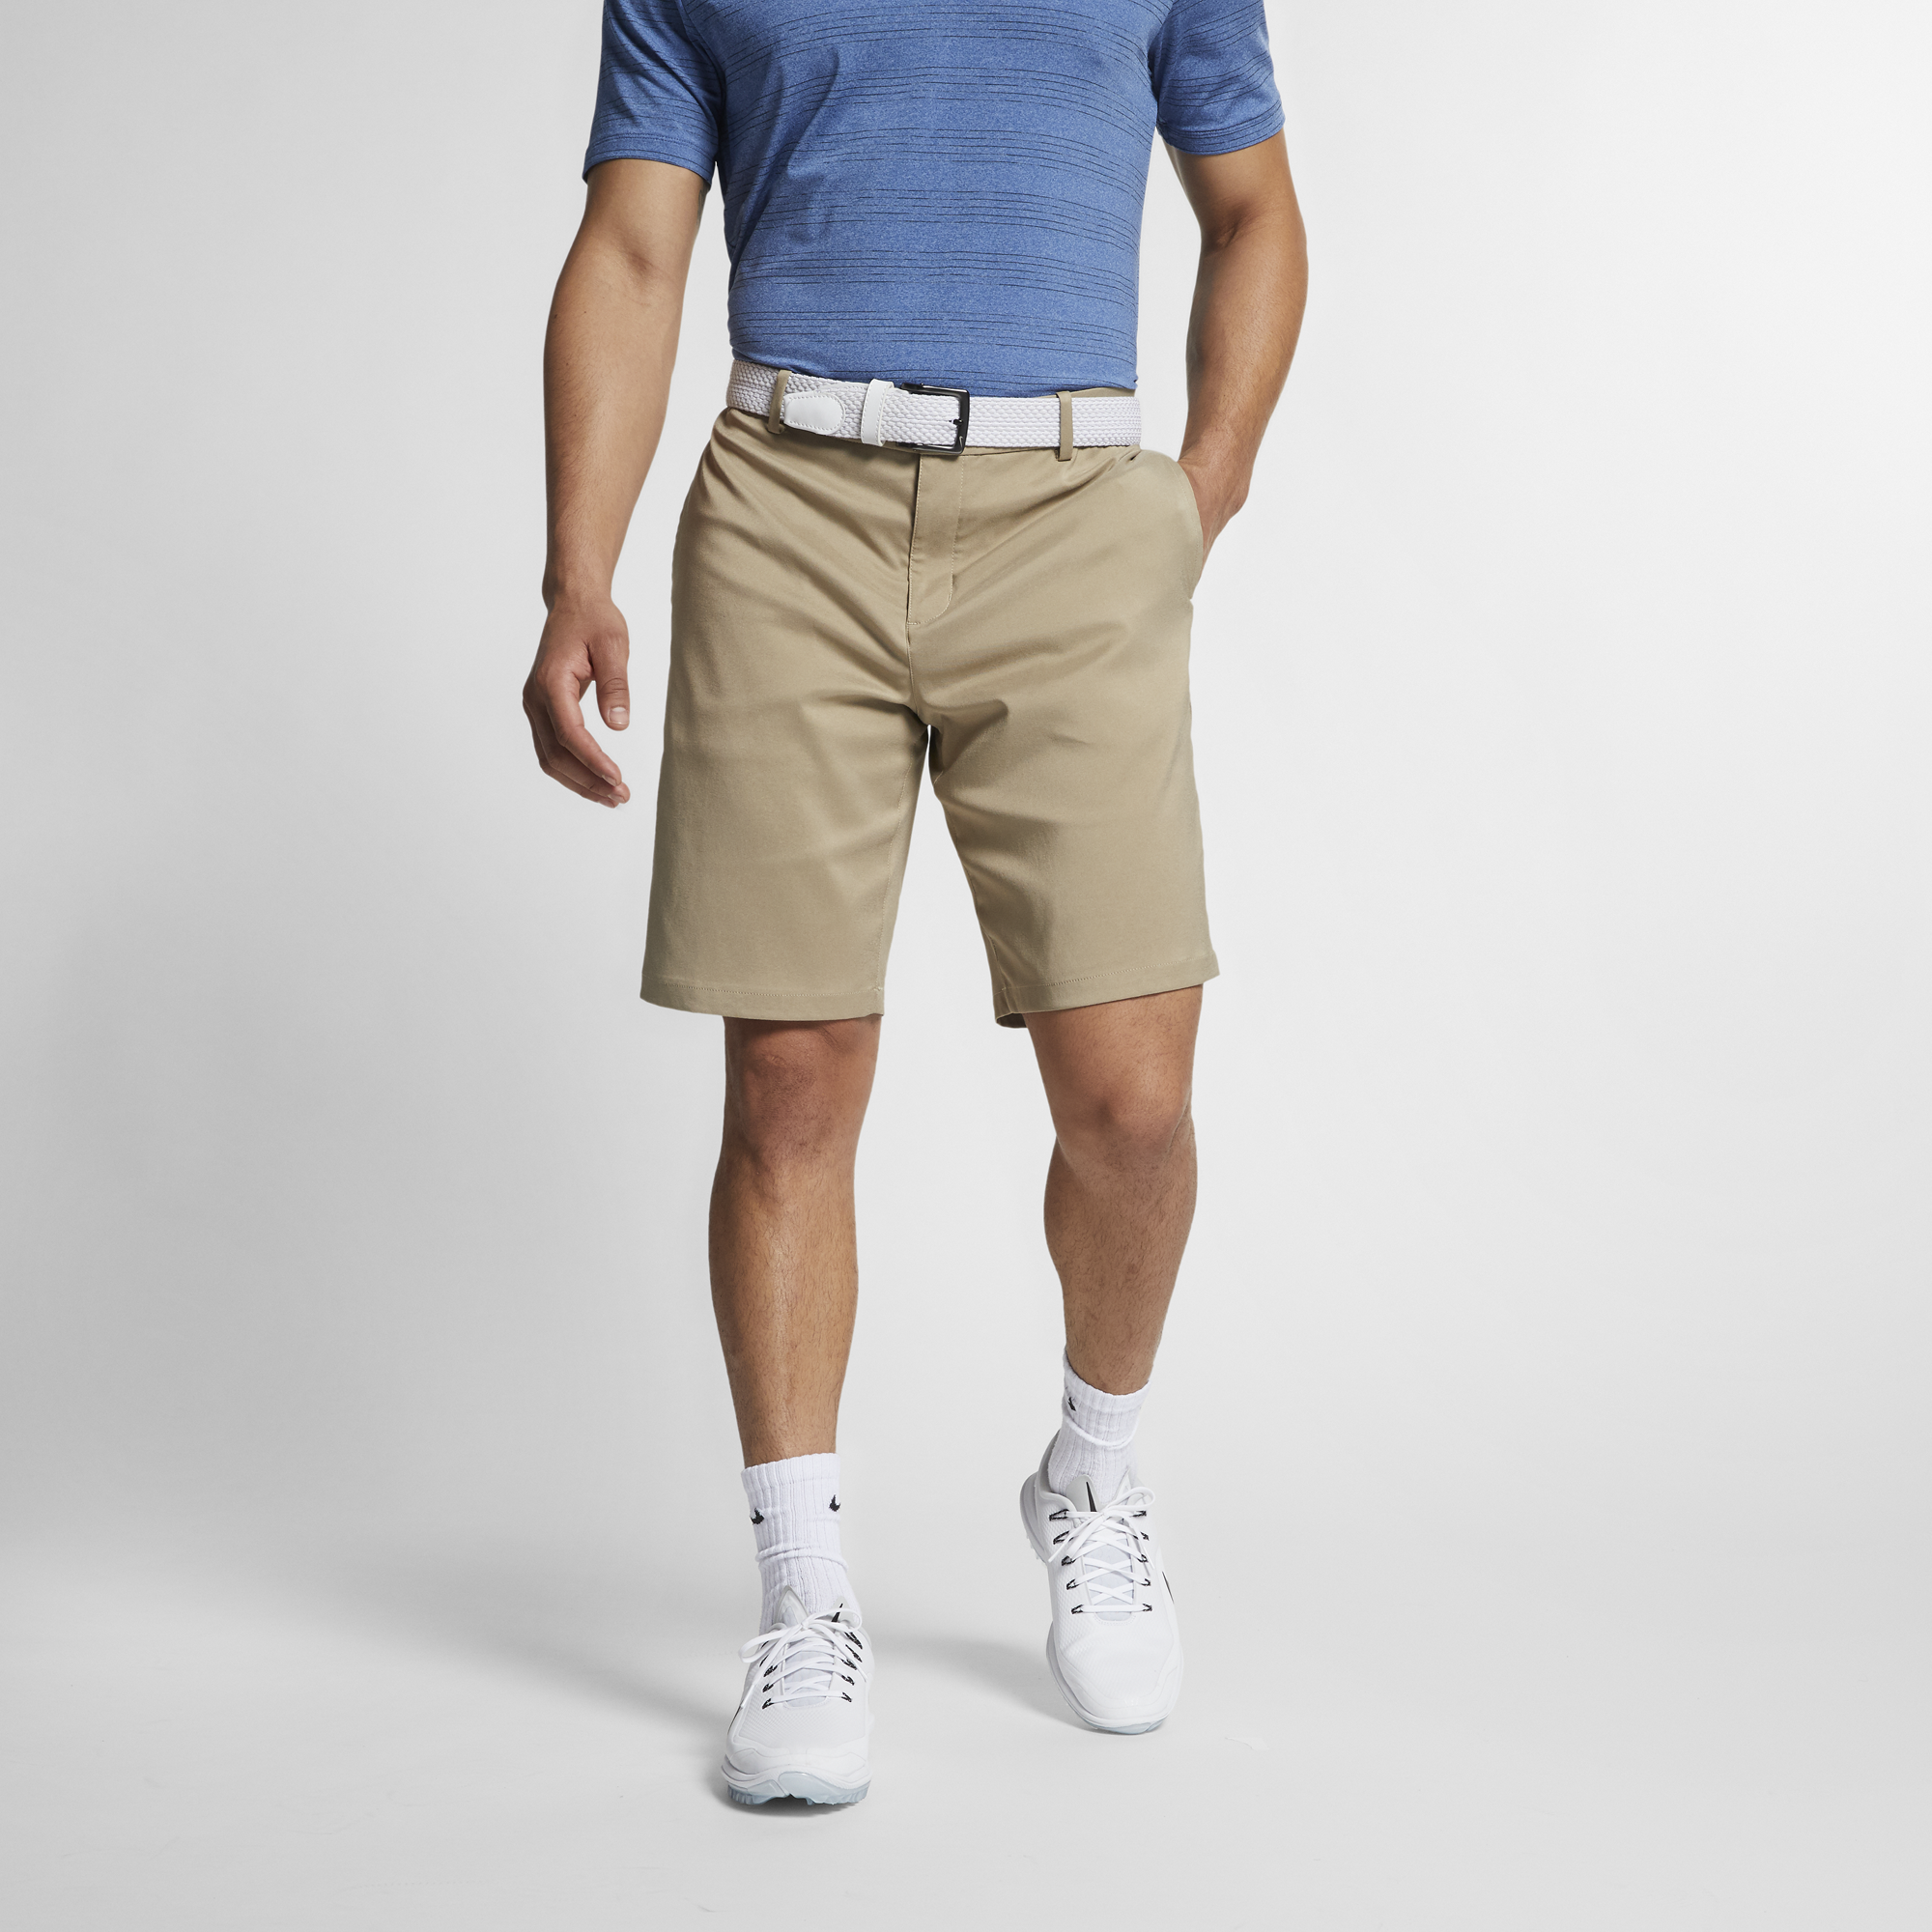 nike men's flex core golf shorts